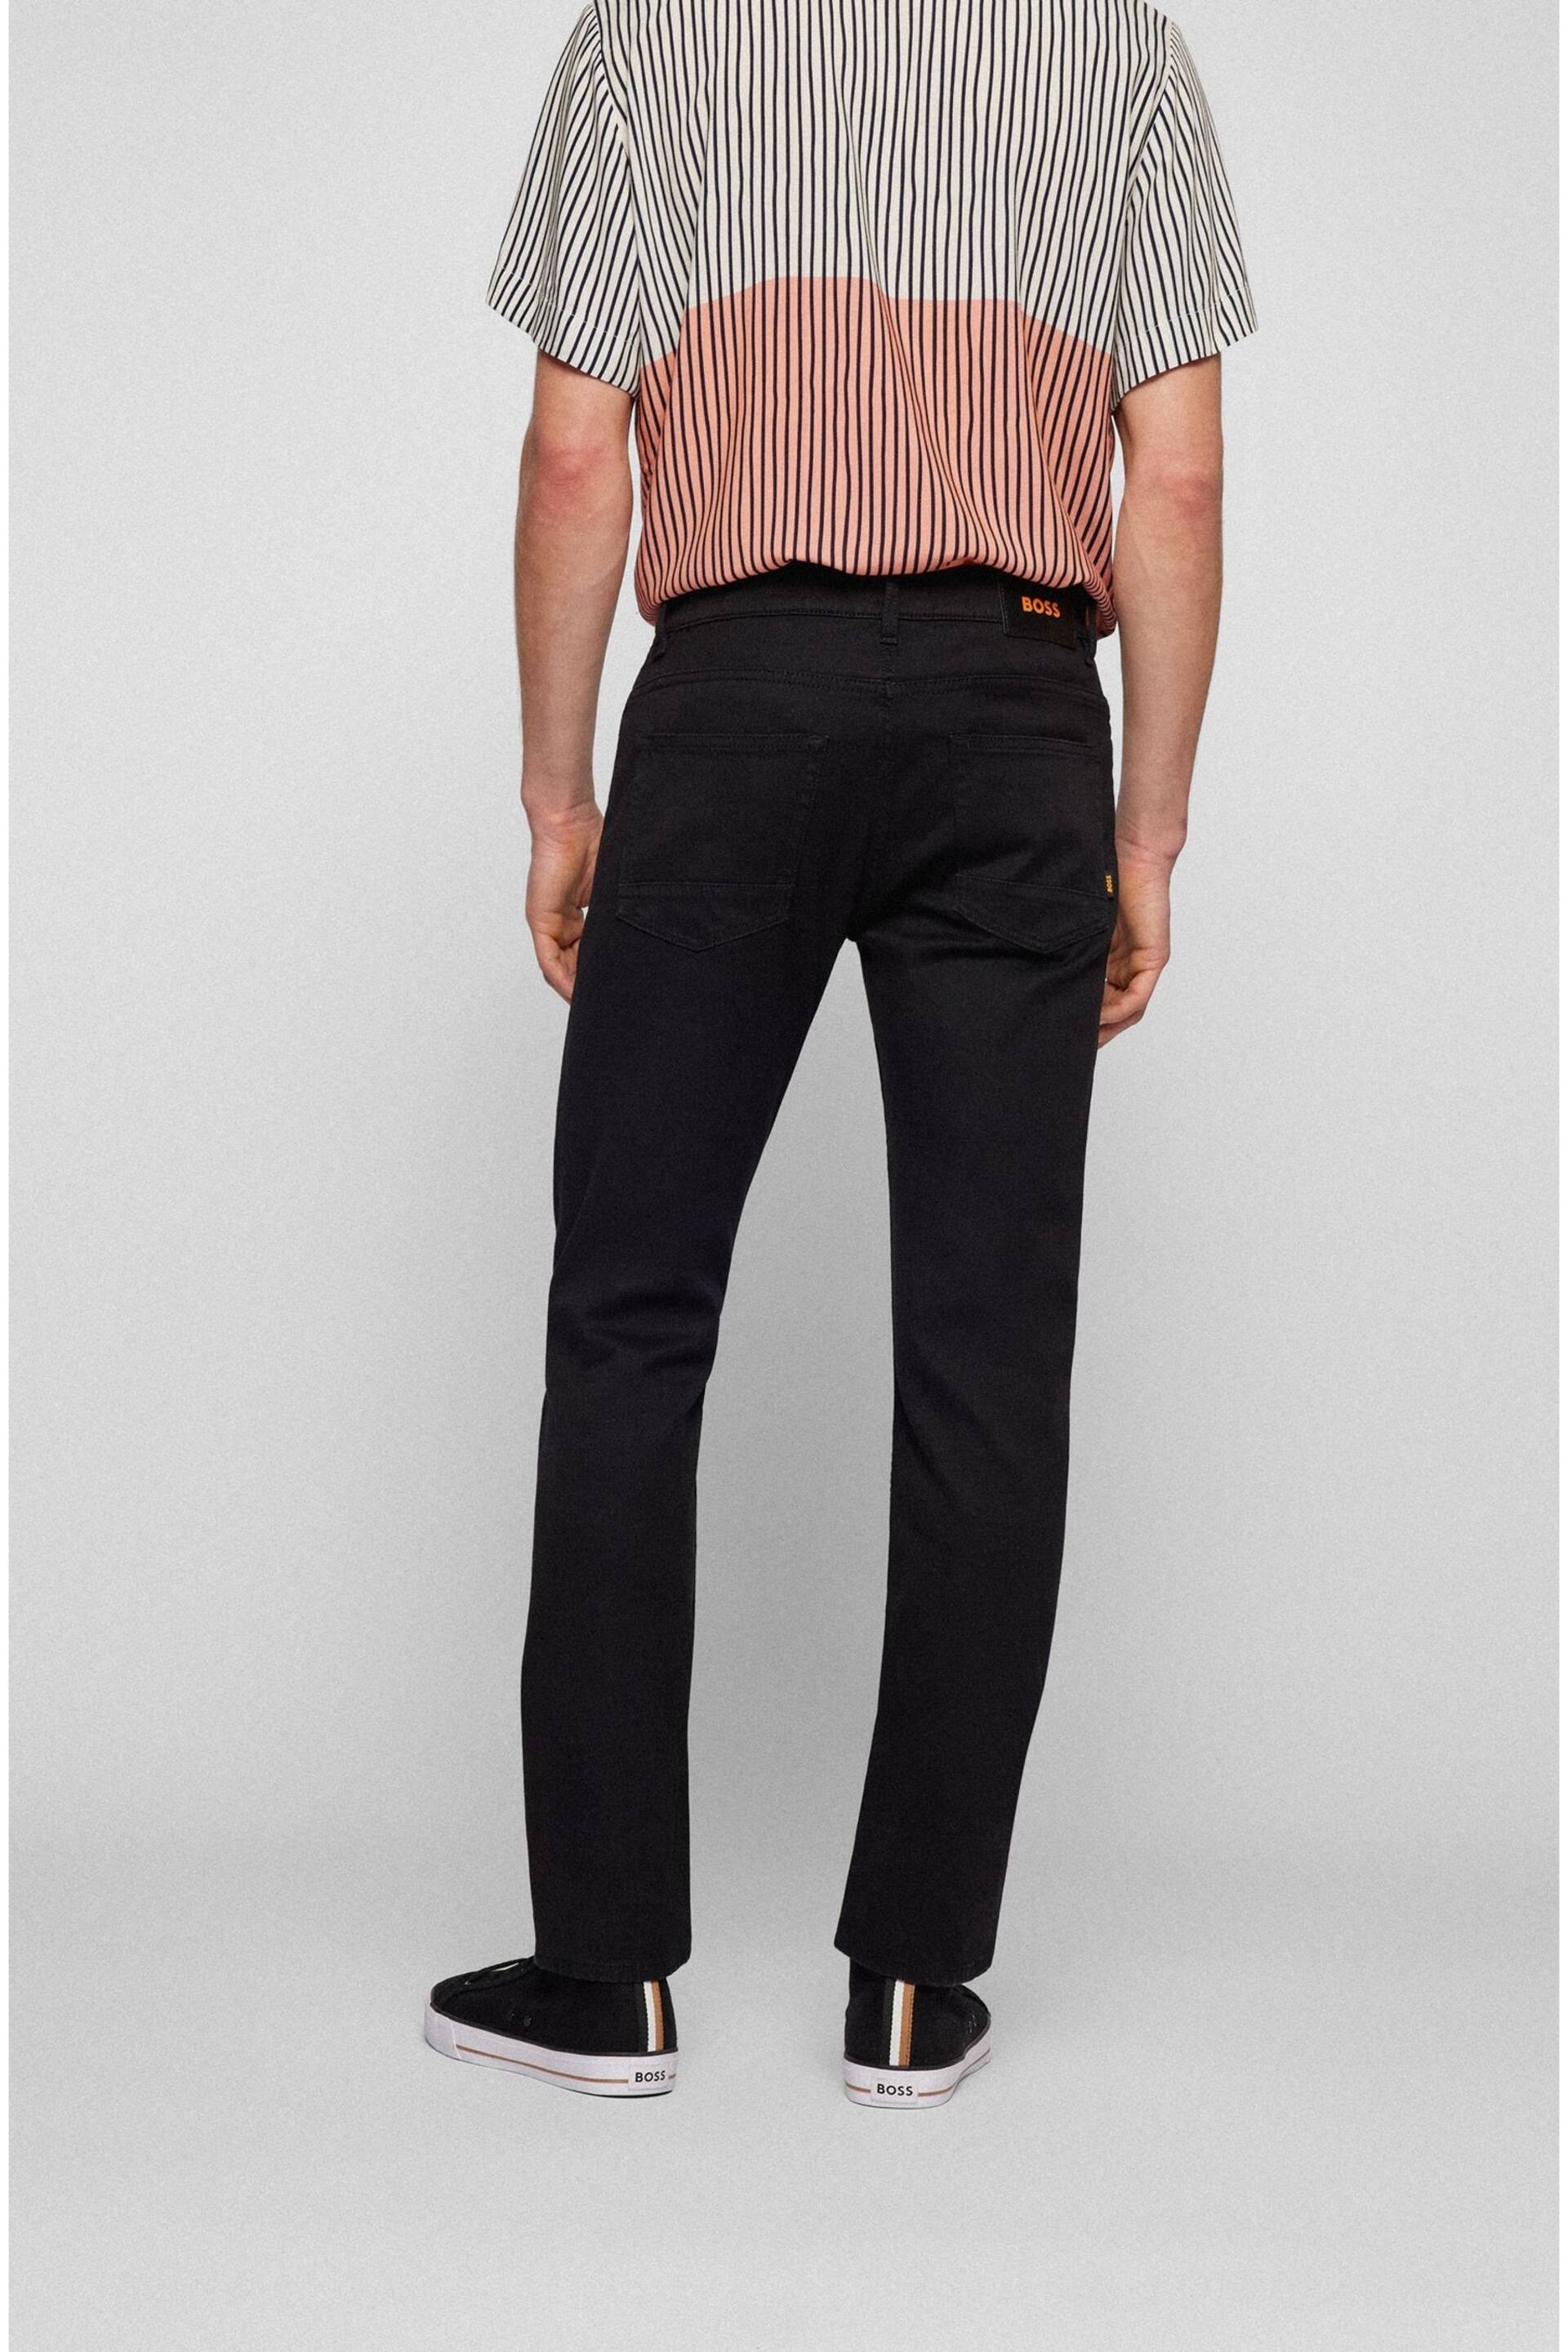 BOSS Black Slim Fit Comfort Stretch Denim Jeans - Image 2 of 5